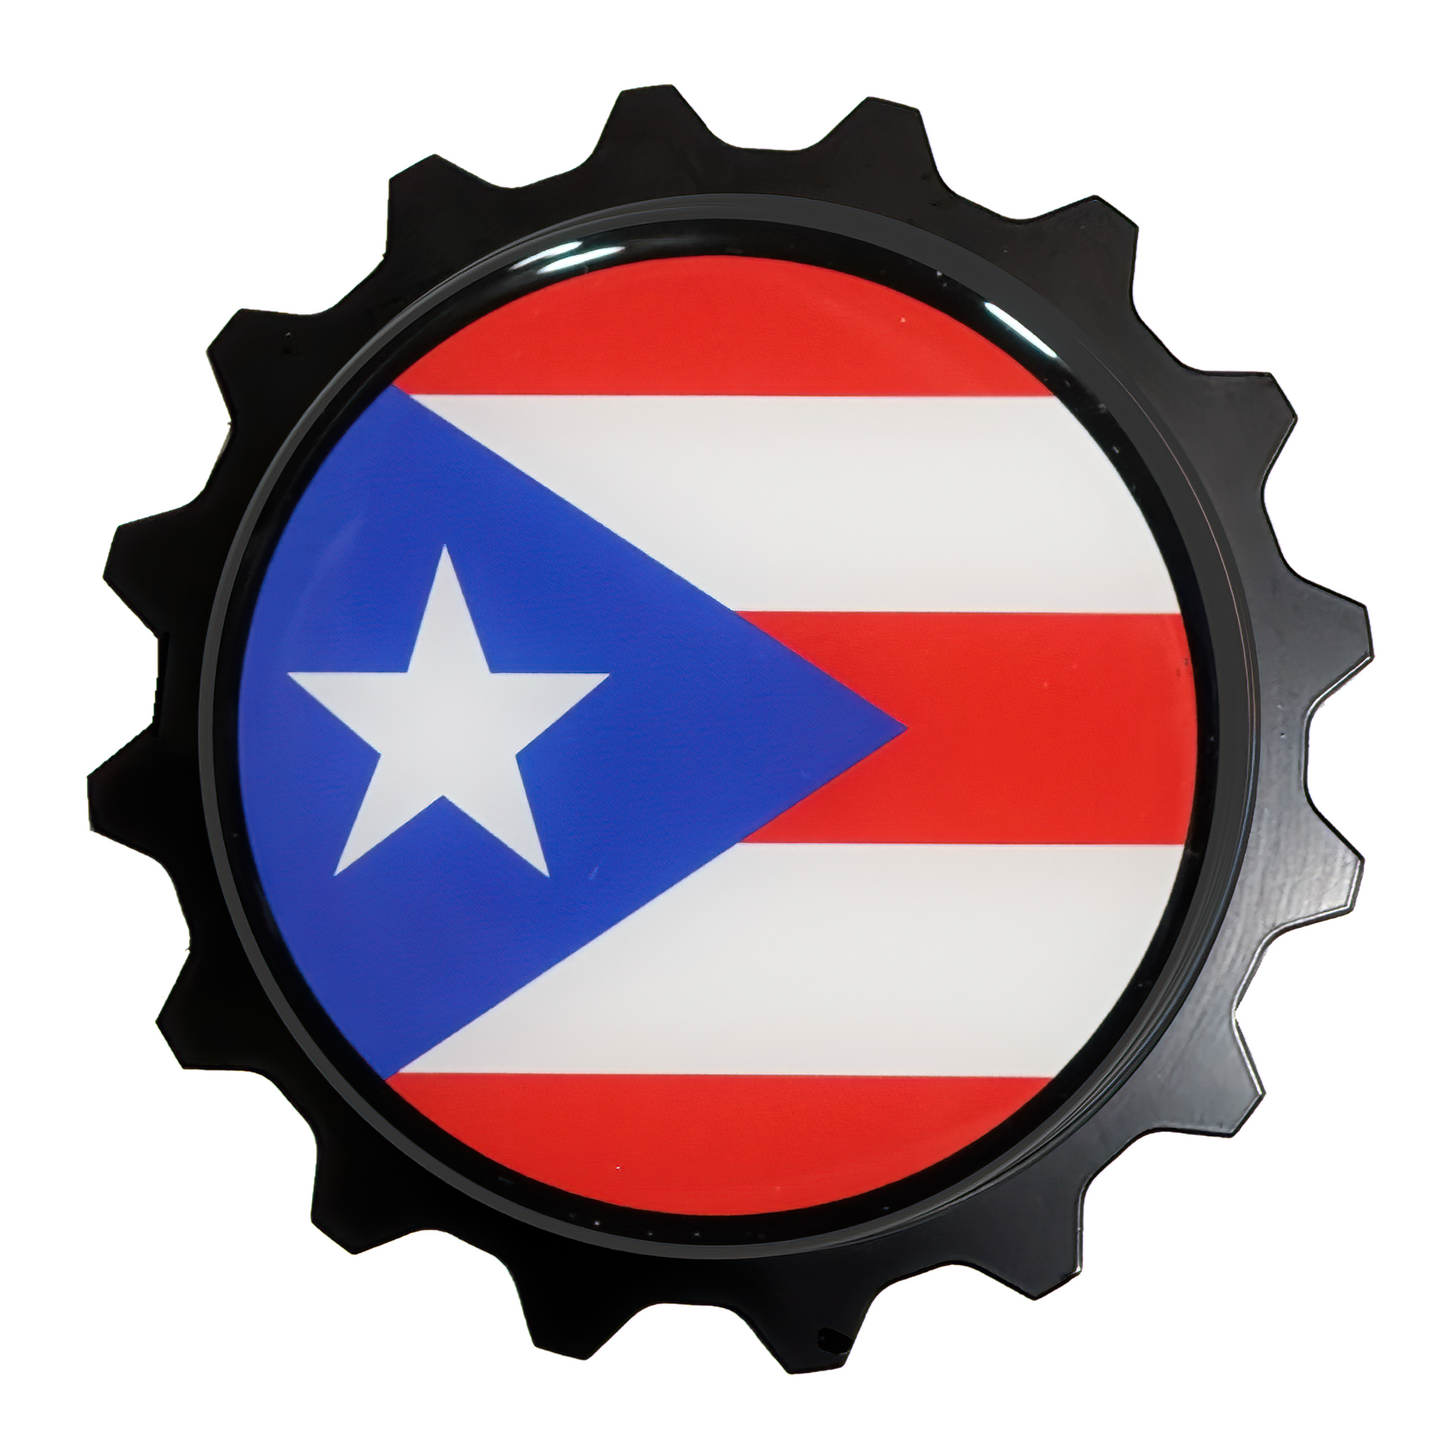 Team Puerto Rico Badge, Club Badge 4x4 Offroad, Texas Tacoma FJ Cruisers Club - State Texas Flag